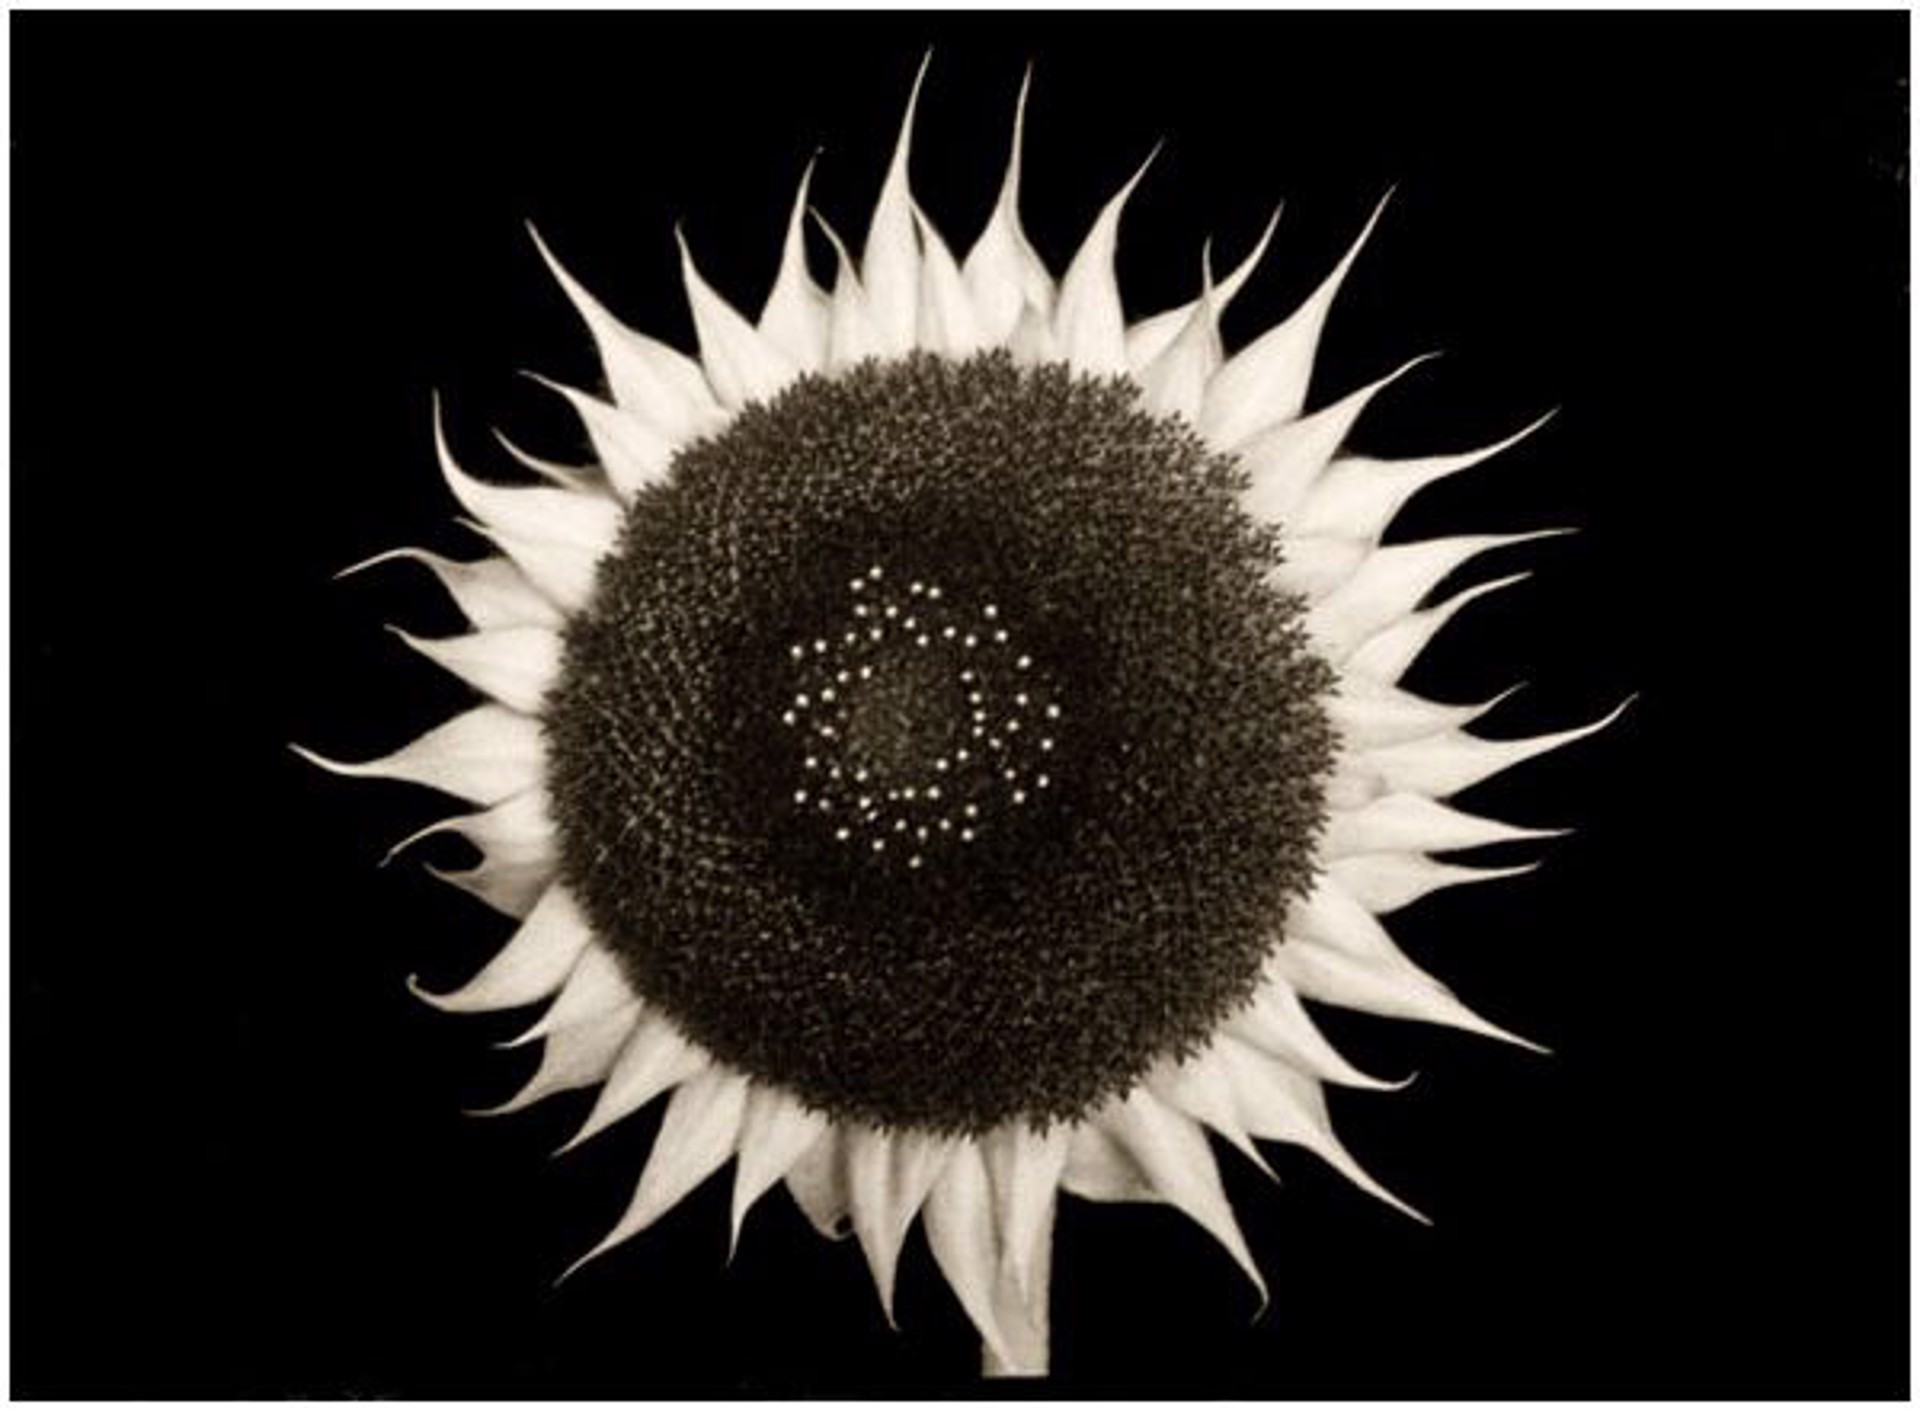 Sunflower #51 5/9 by Frank Hunter